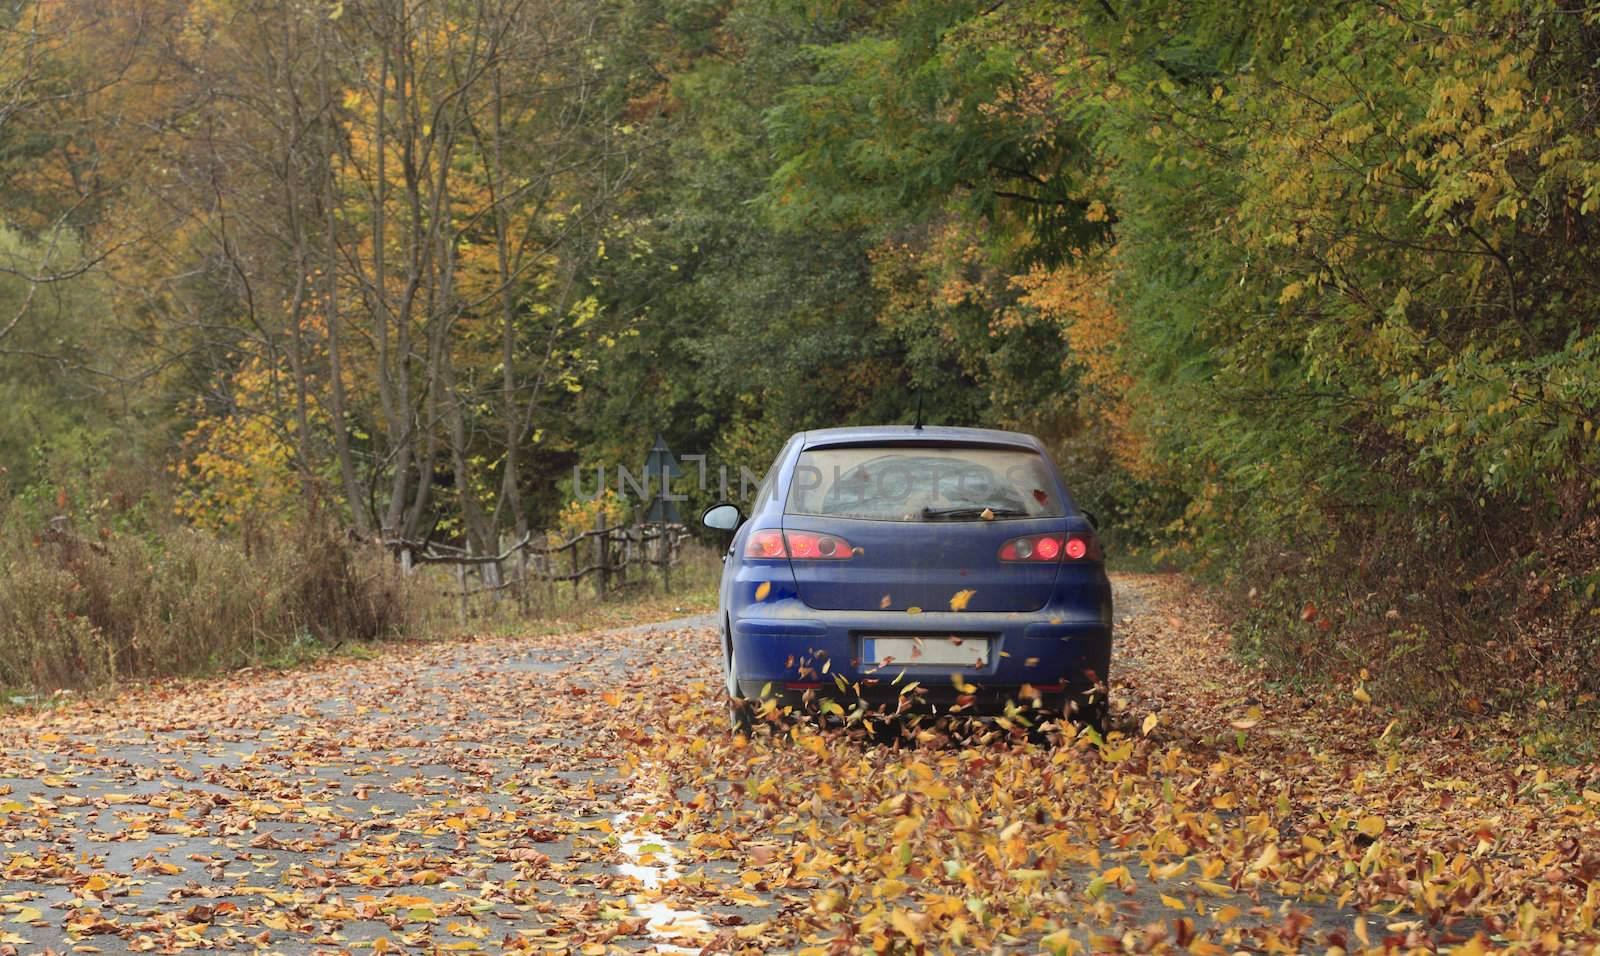 Autumn drive by RazvanPhotography